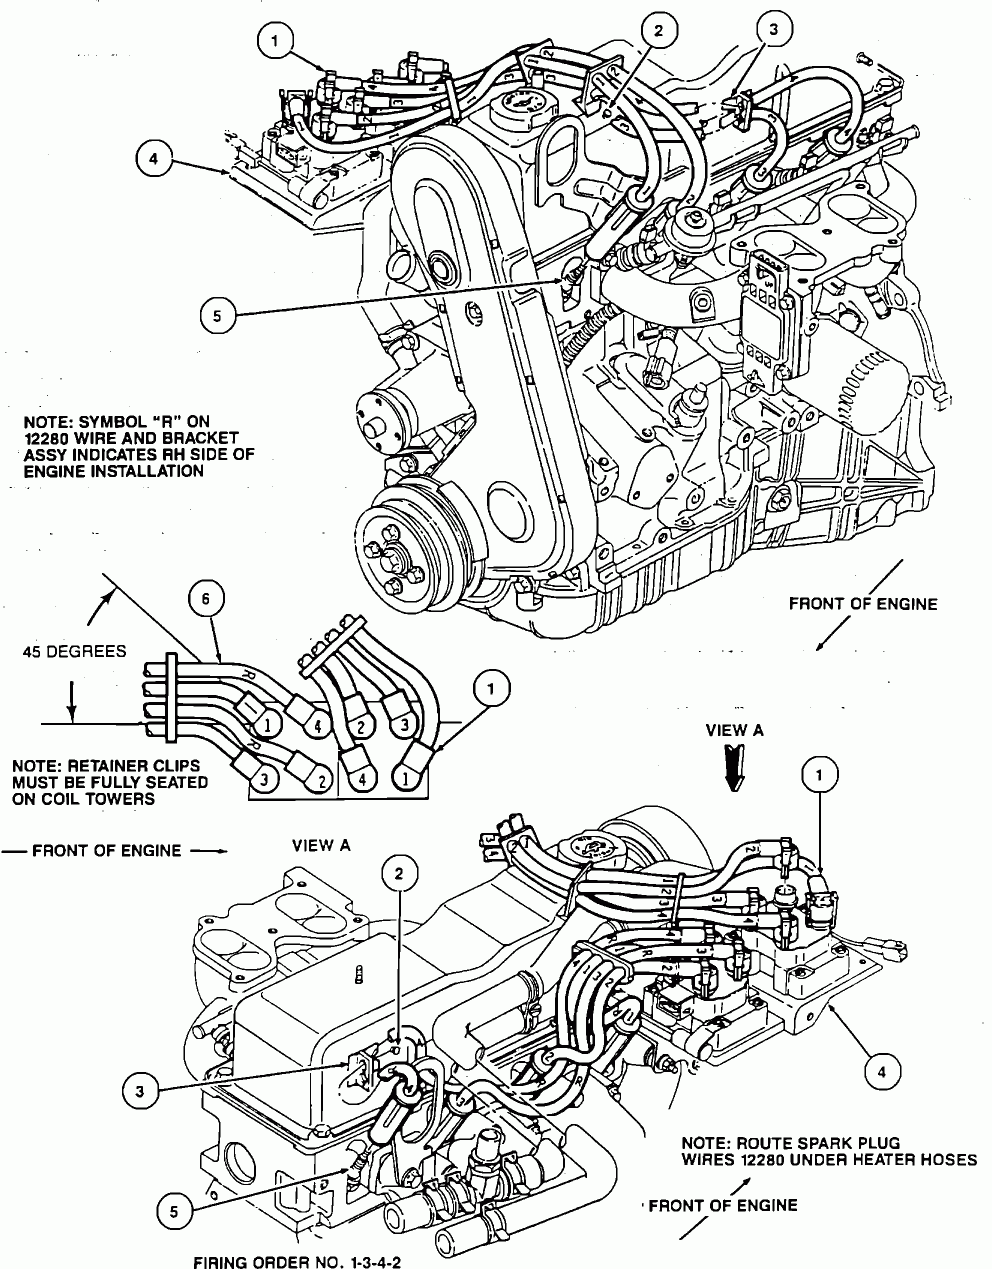 Diagram] Ford Focus Coil Pack Wiring Diagrams Full Version